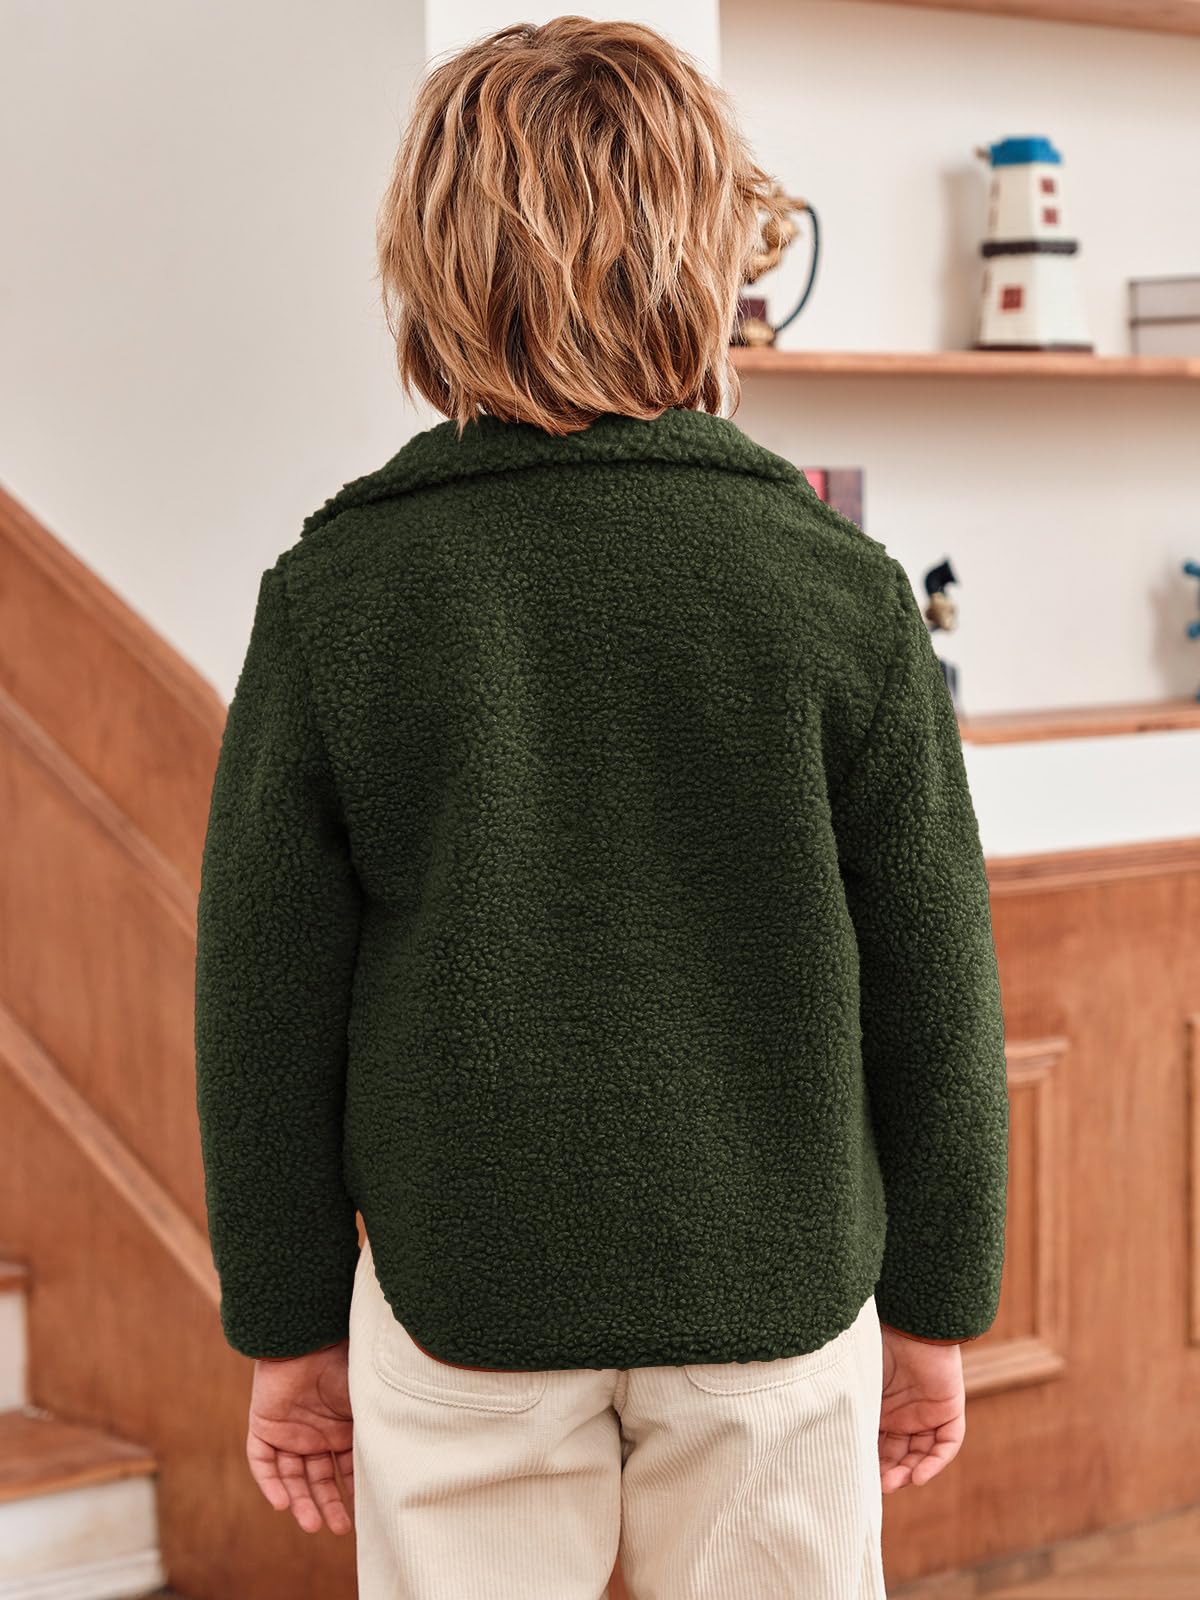 Haloumoning Boys Half Zip Up Sherpa Sweatshirts Kids Fashion Color Block Fleece Pullover Clothes With Pockets 5-14 Years